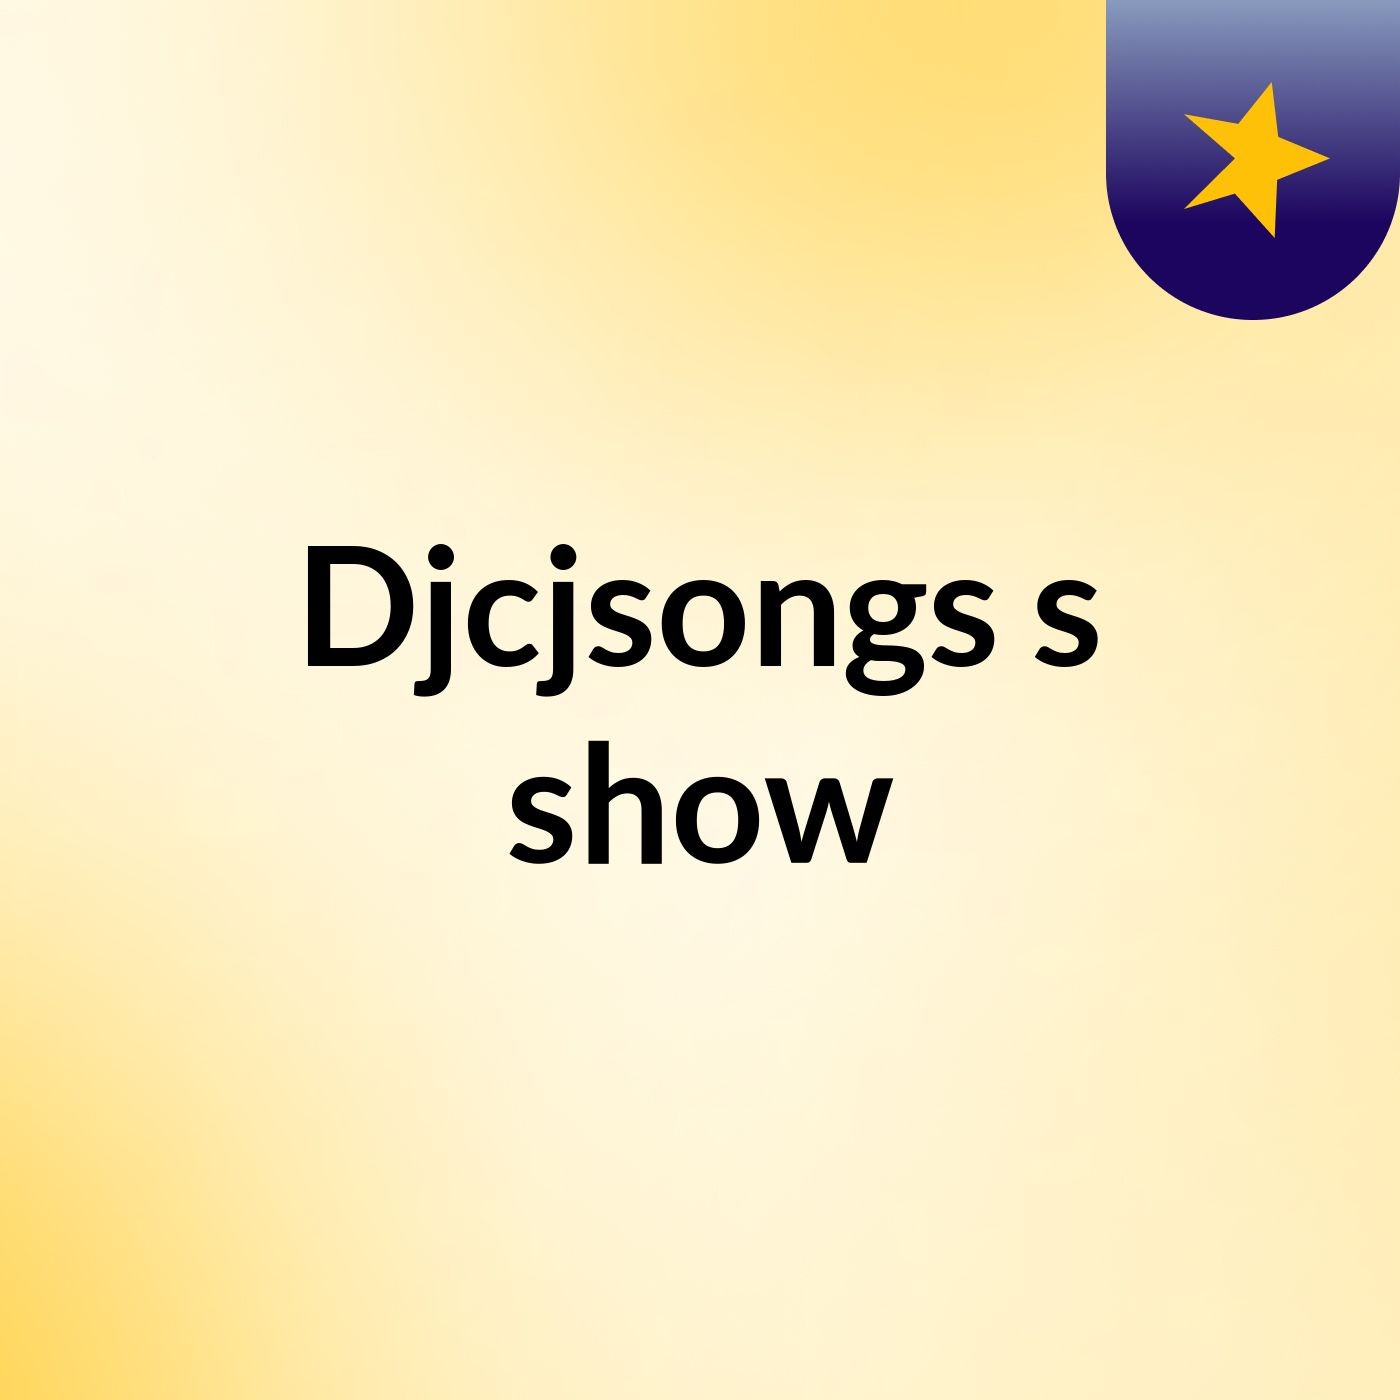 Djcjsongs's show